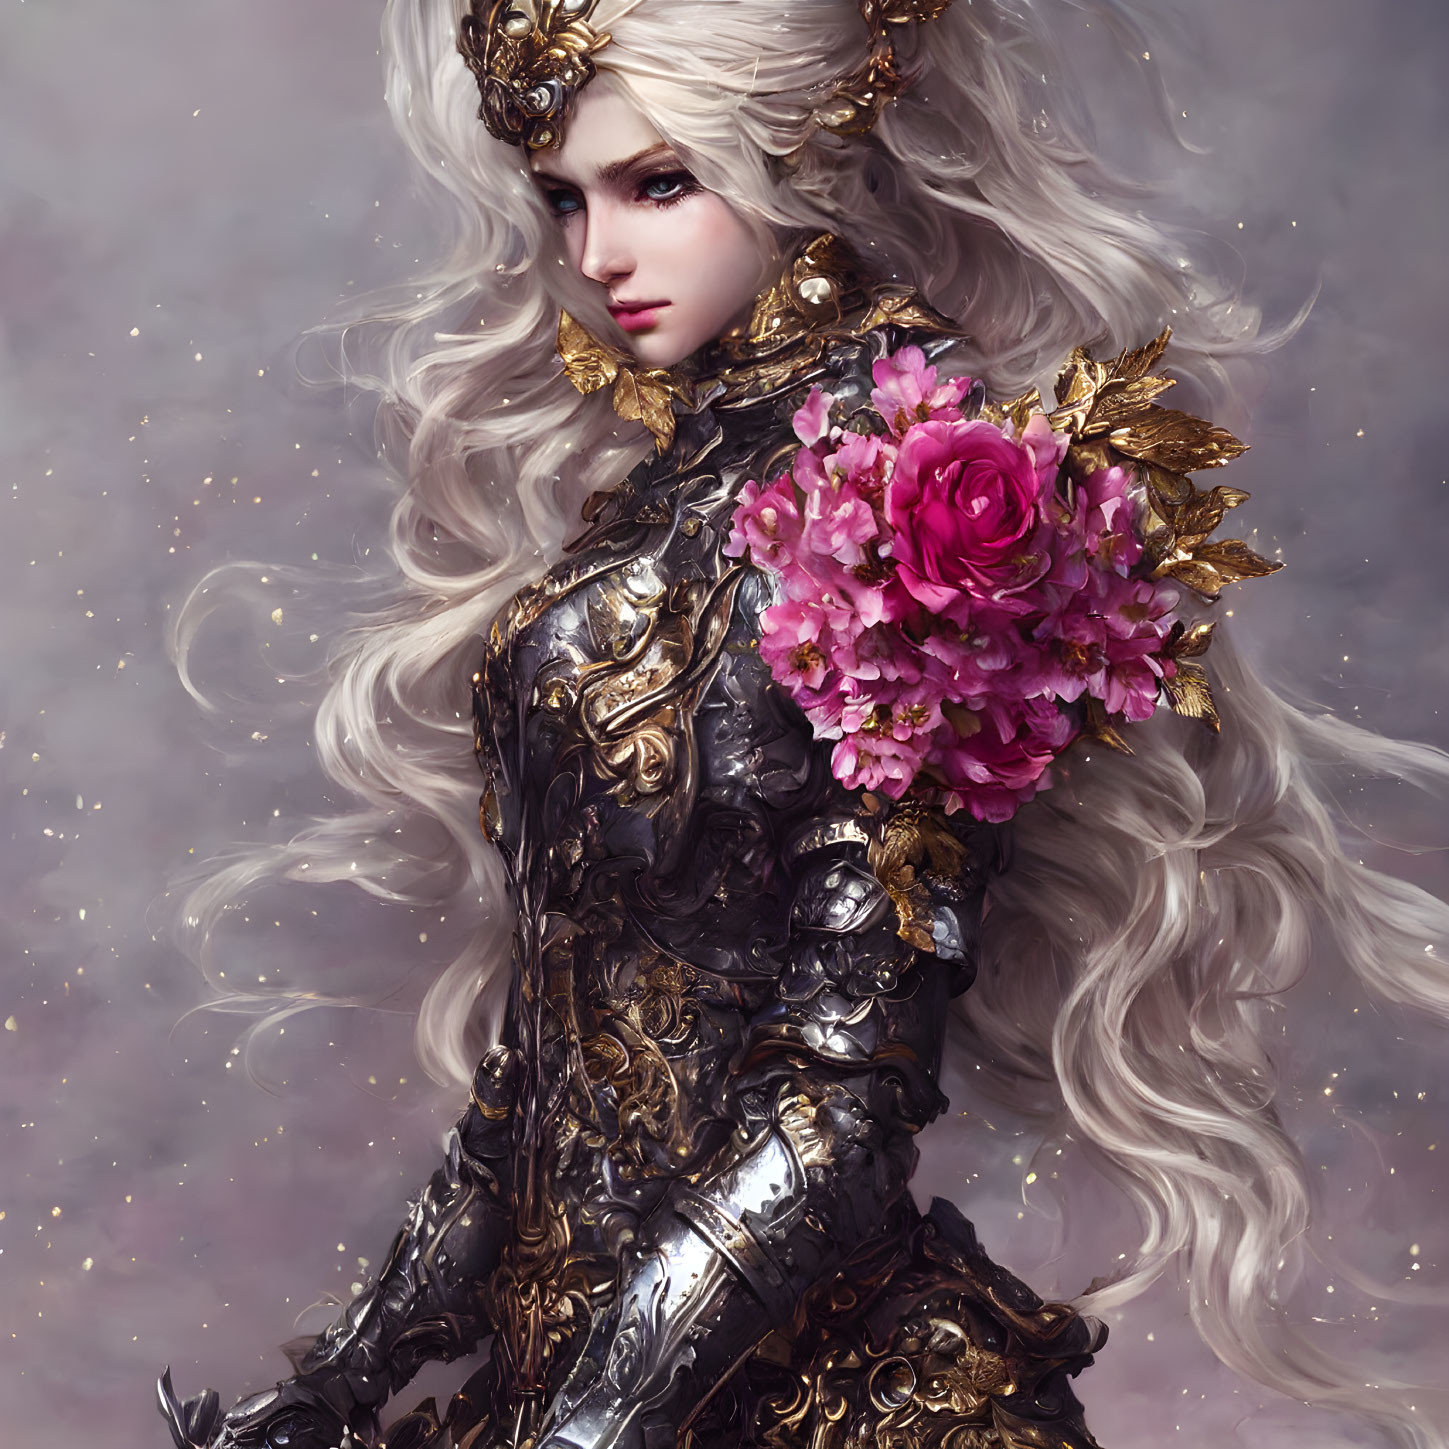 Illustration of female warrior with white wavy hair in ornate dark armor